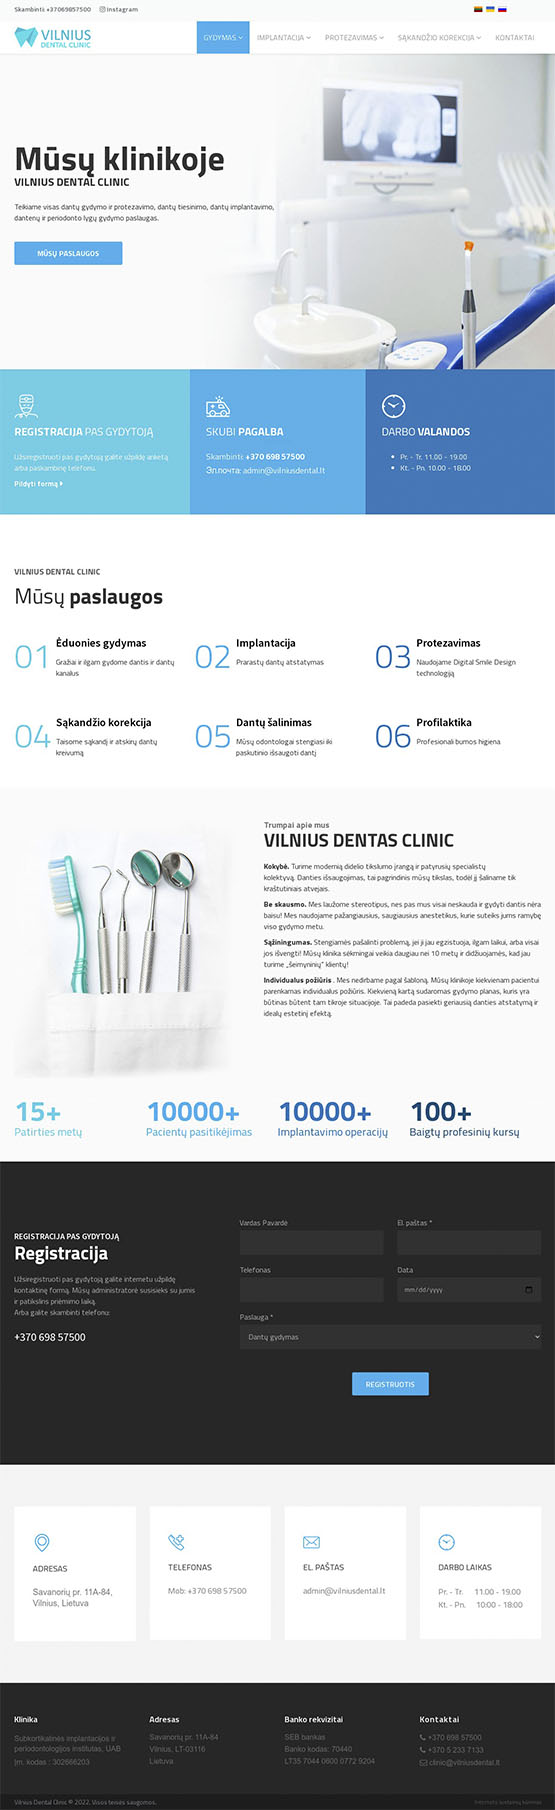 Tinklapis Vilnius Dental Clinic